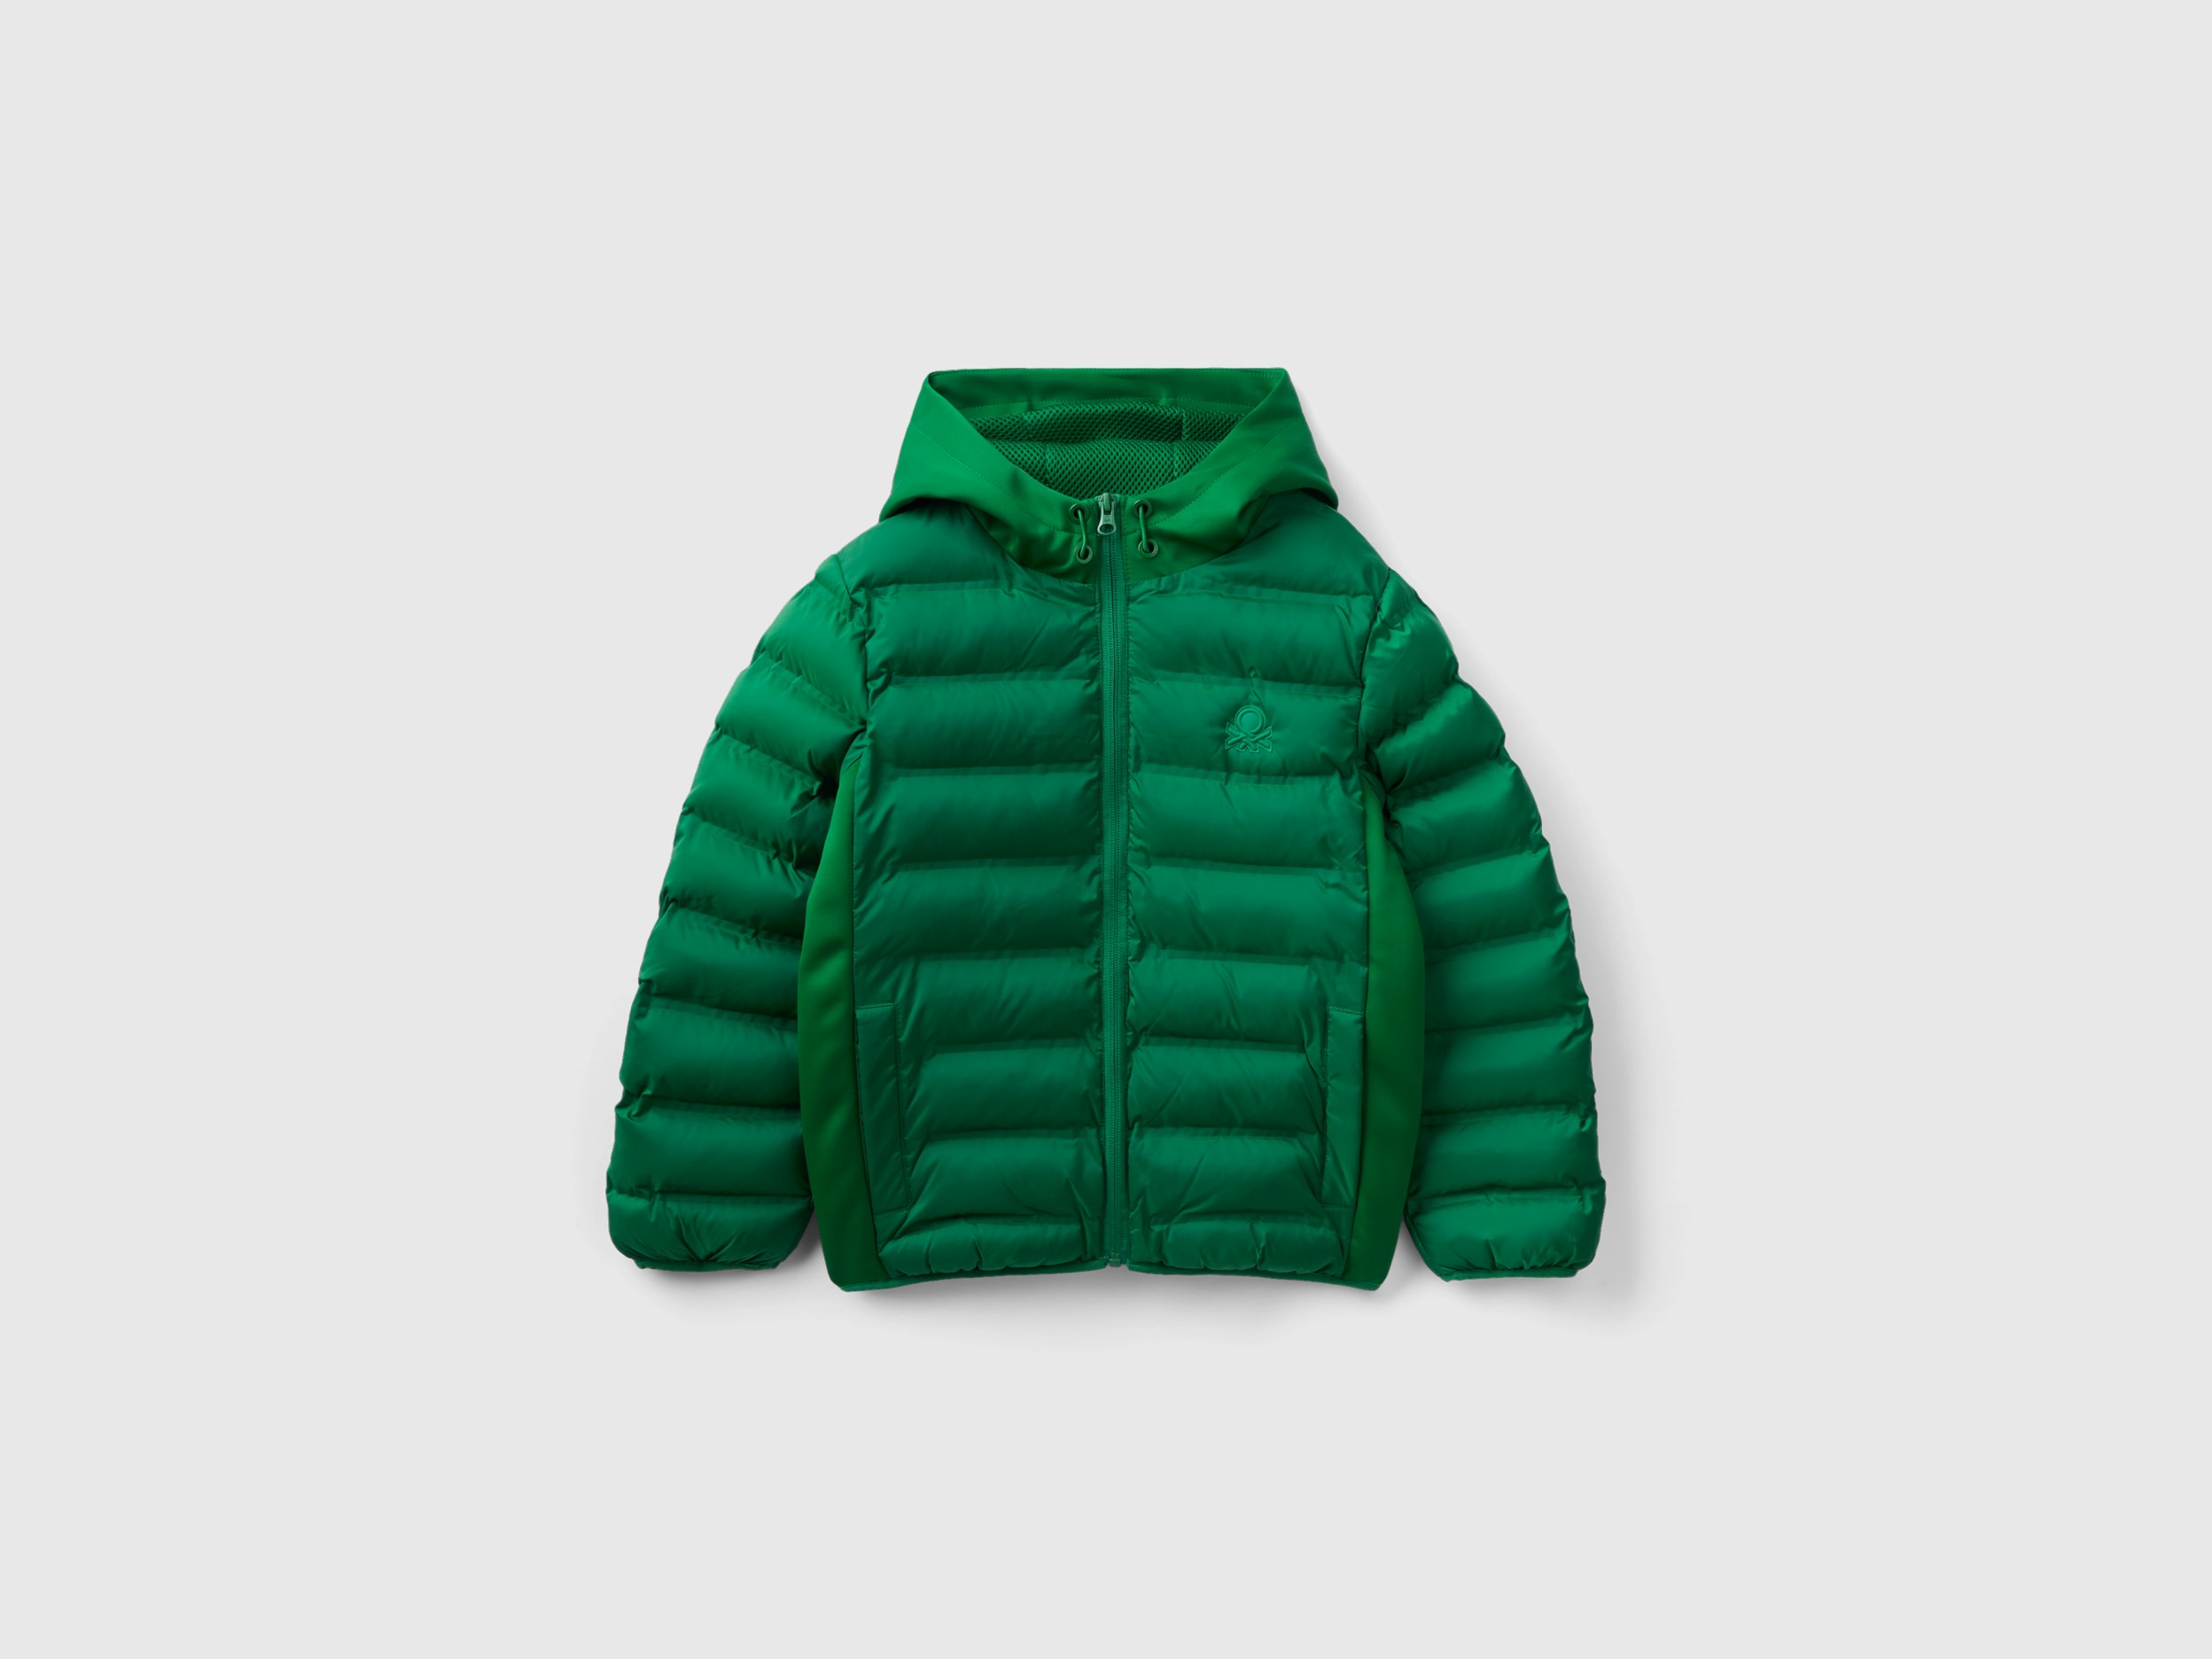 Benetton, Jacket With Neoprene Details, size 2XL, Green, Kids